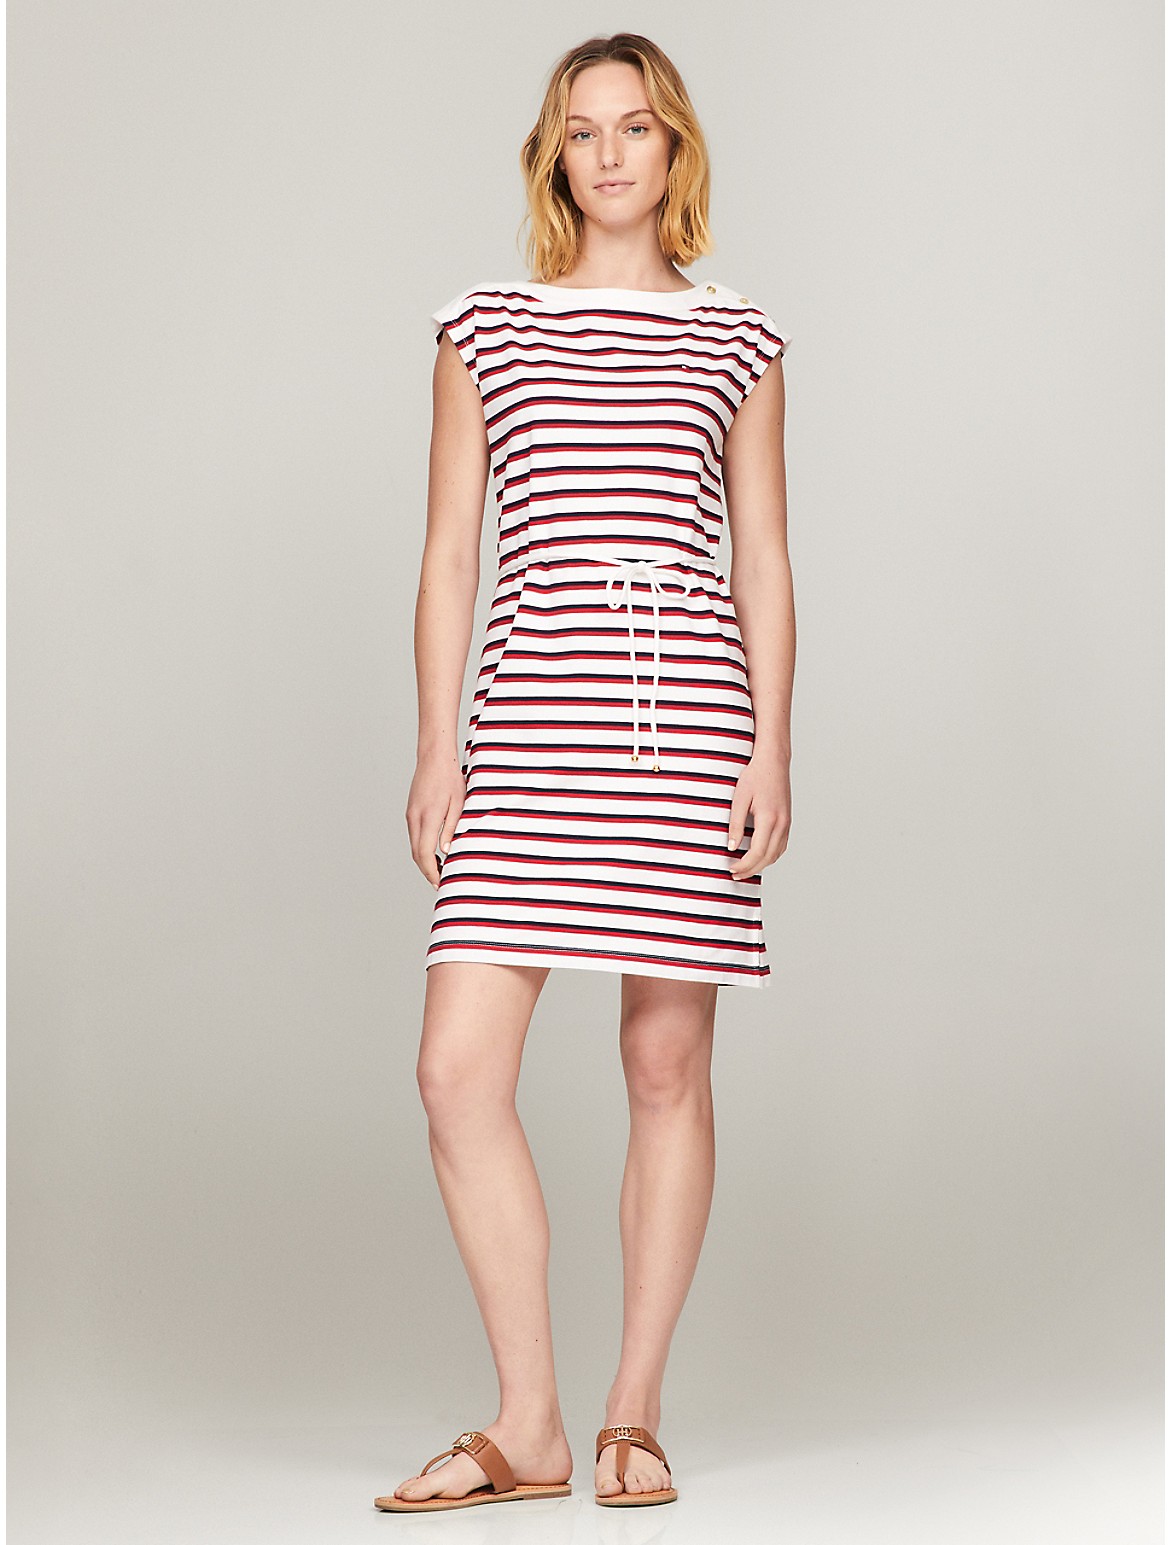 Tommy Hilfiger Women's Everyday Stripe Dress